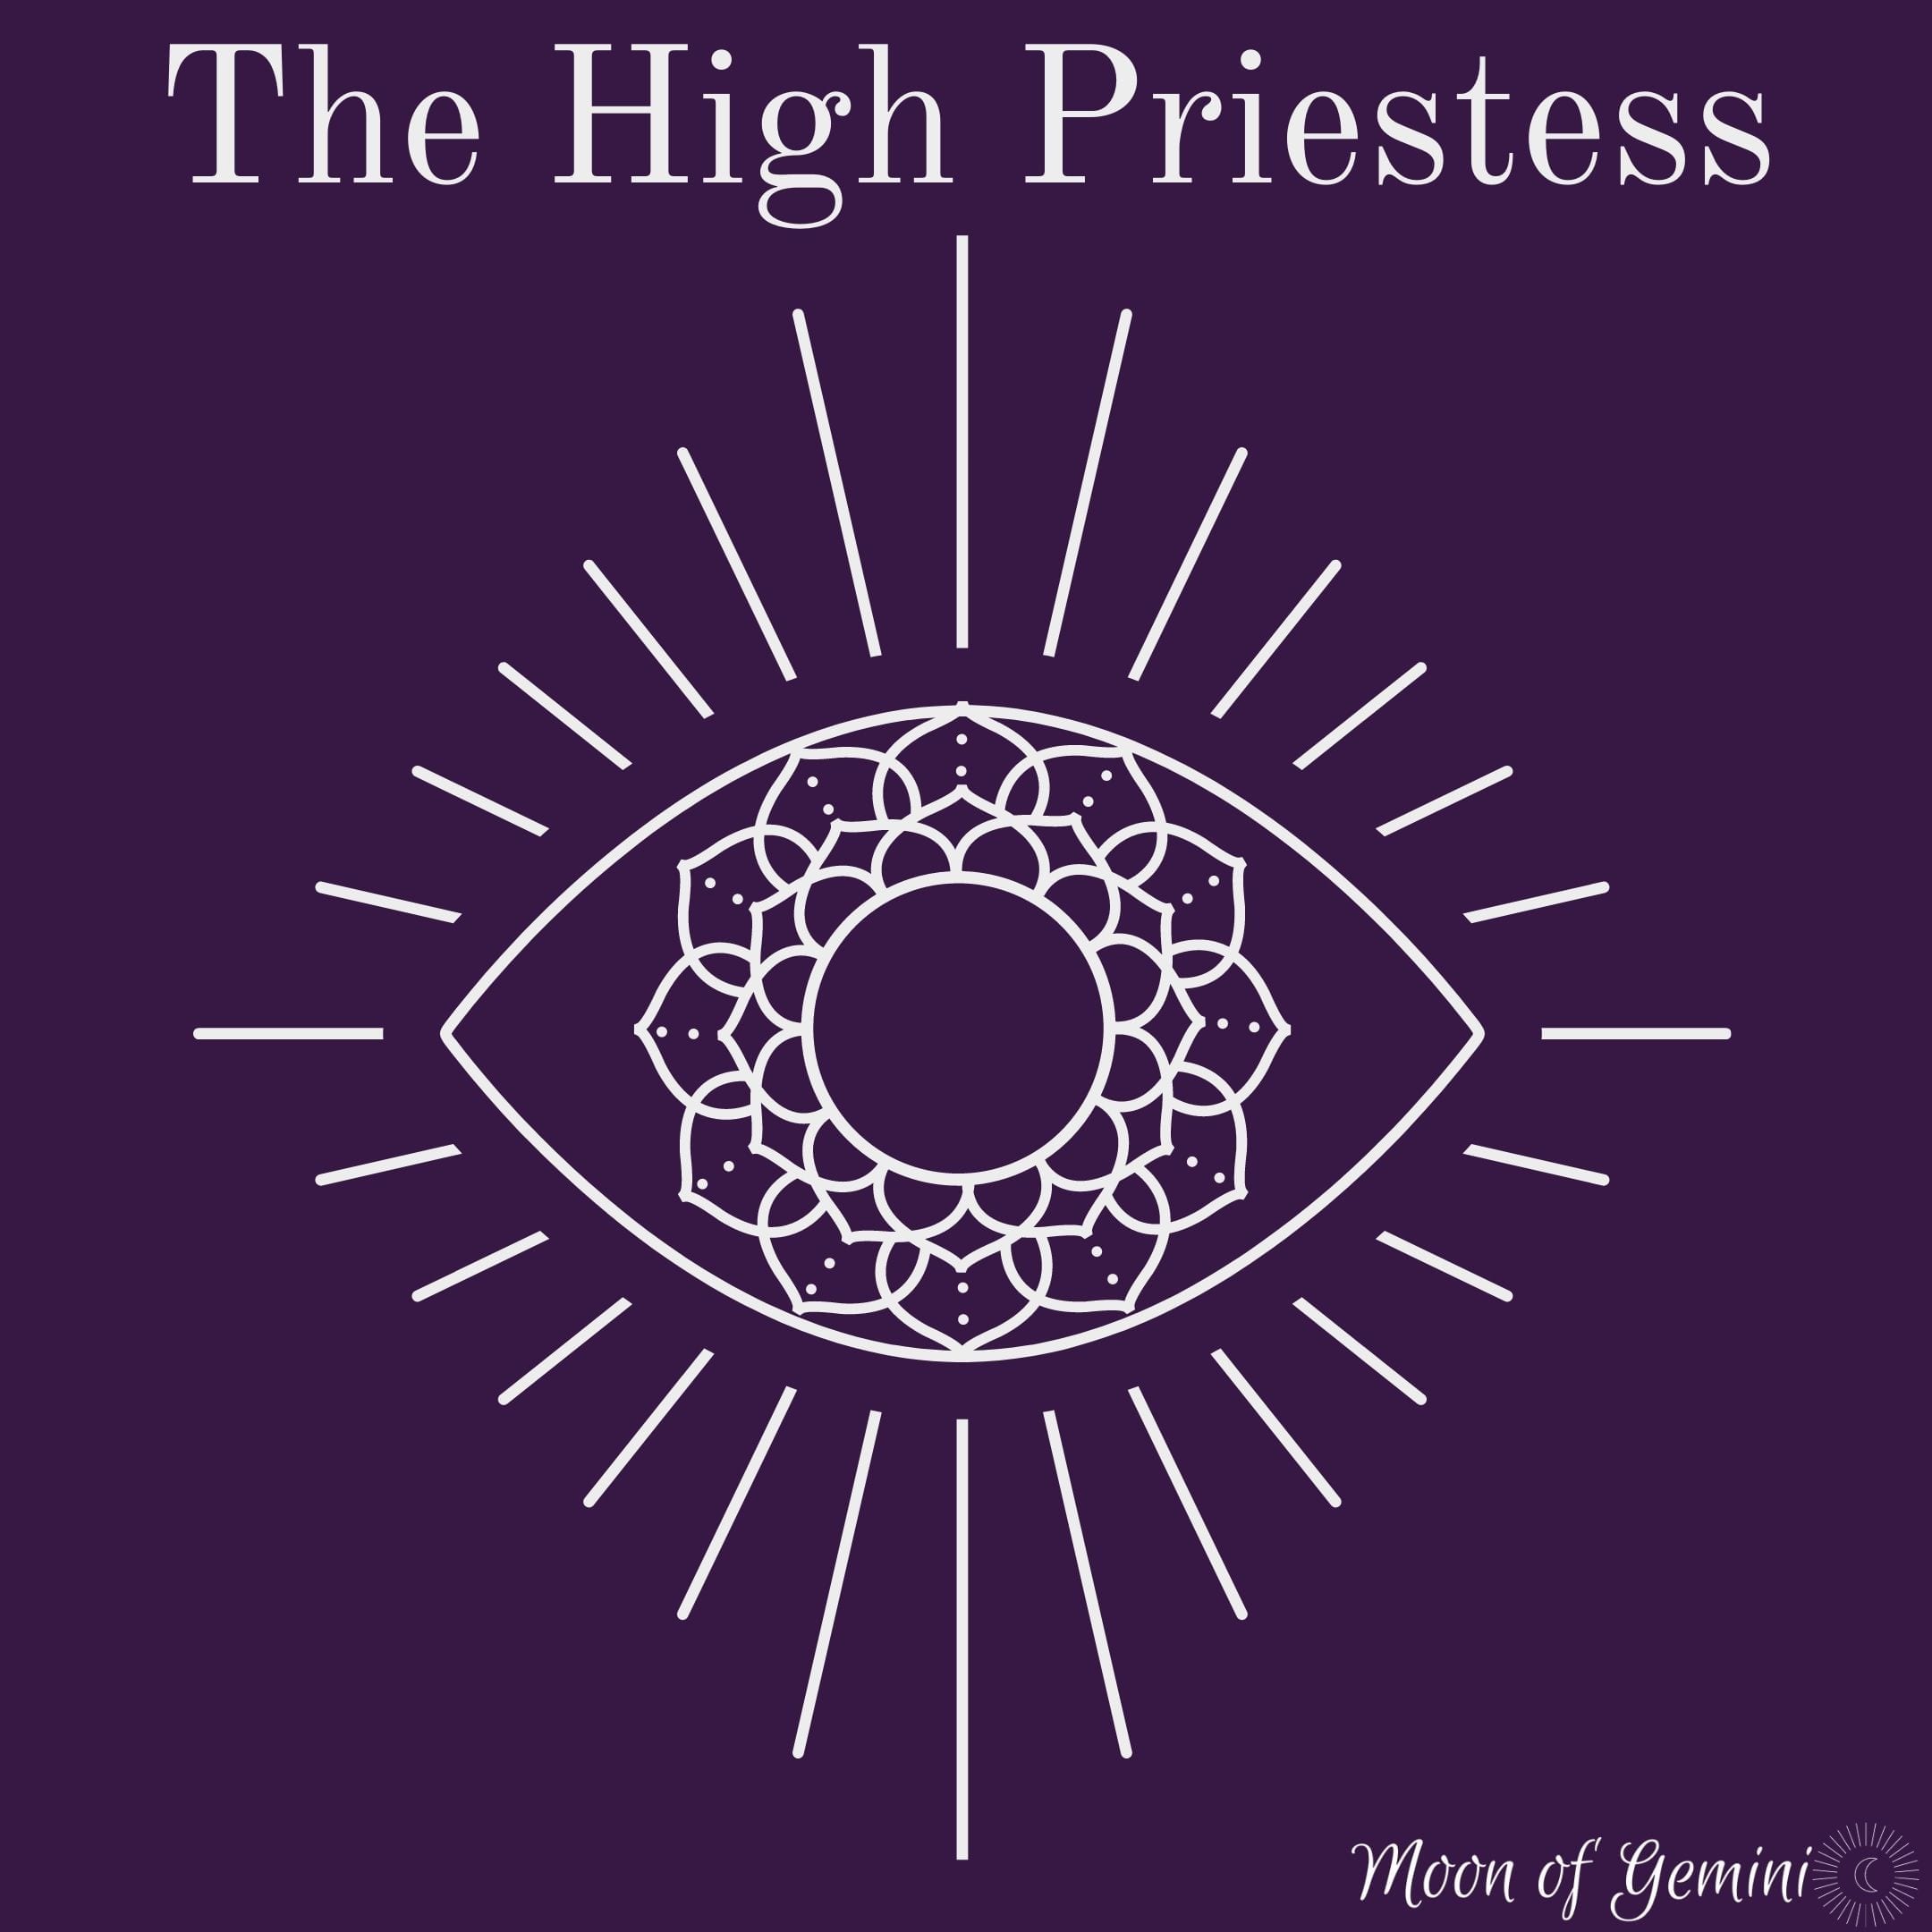 High moon priestess and The High